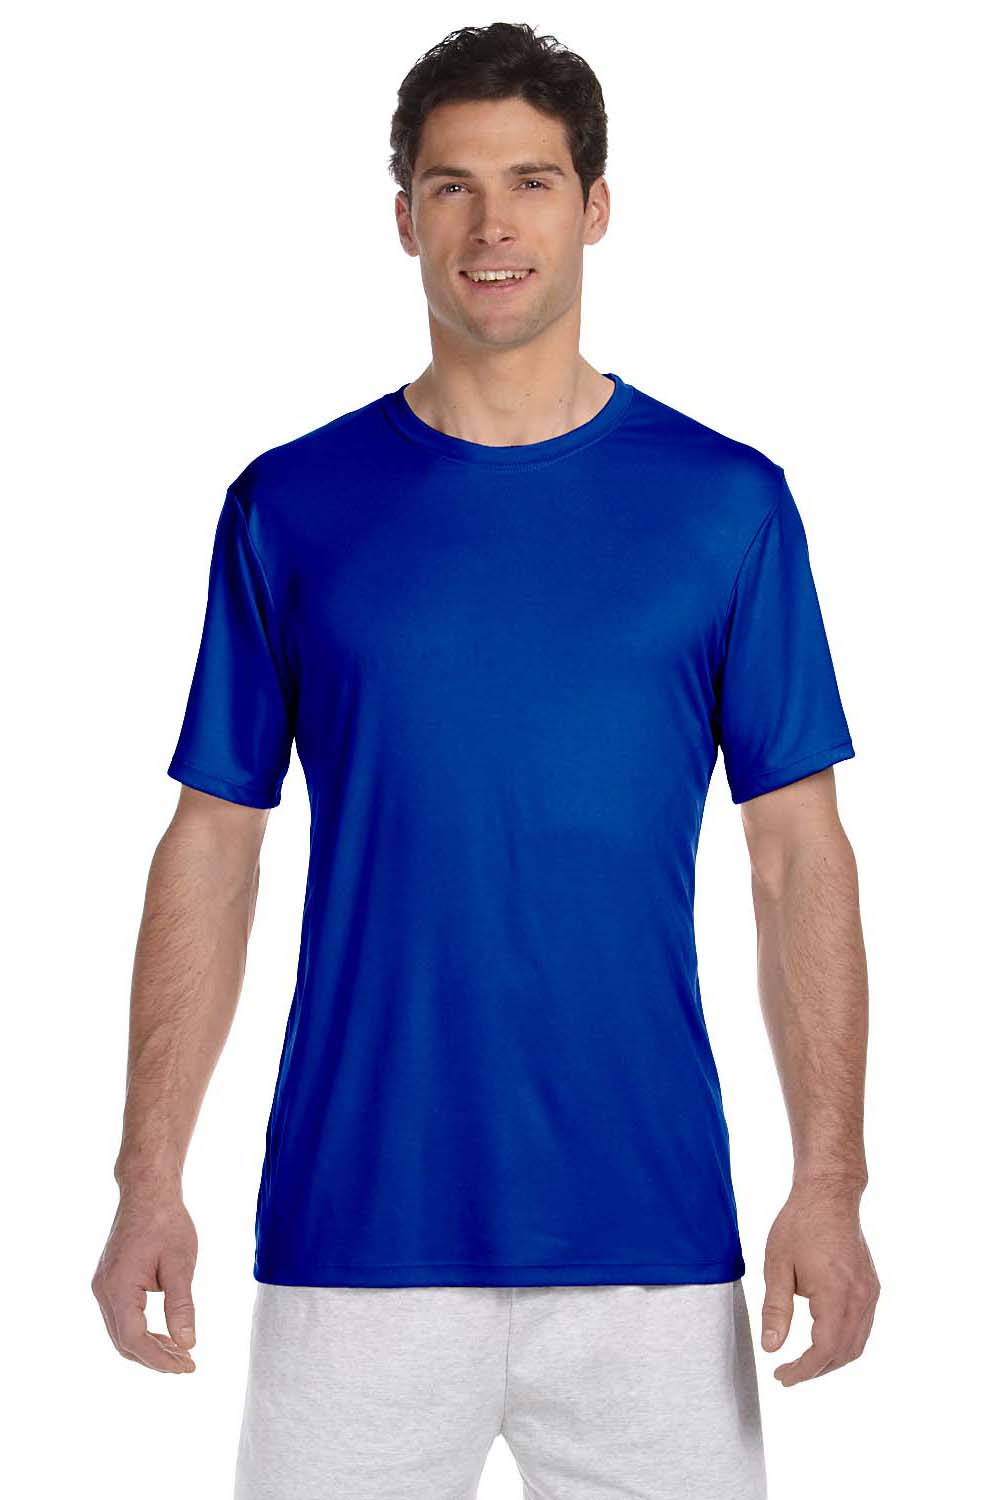 Hanes 4820 Mens Cool DRI FreshIQ Moisture Wicking Short Sleeve Crewneck T-Shirt Royal Blue Front